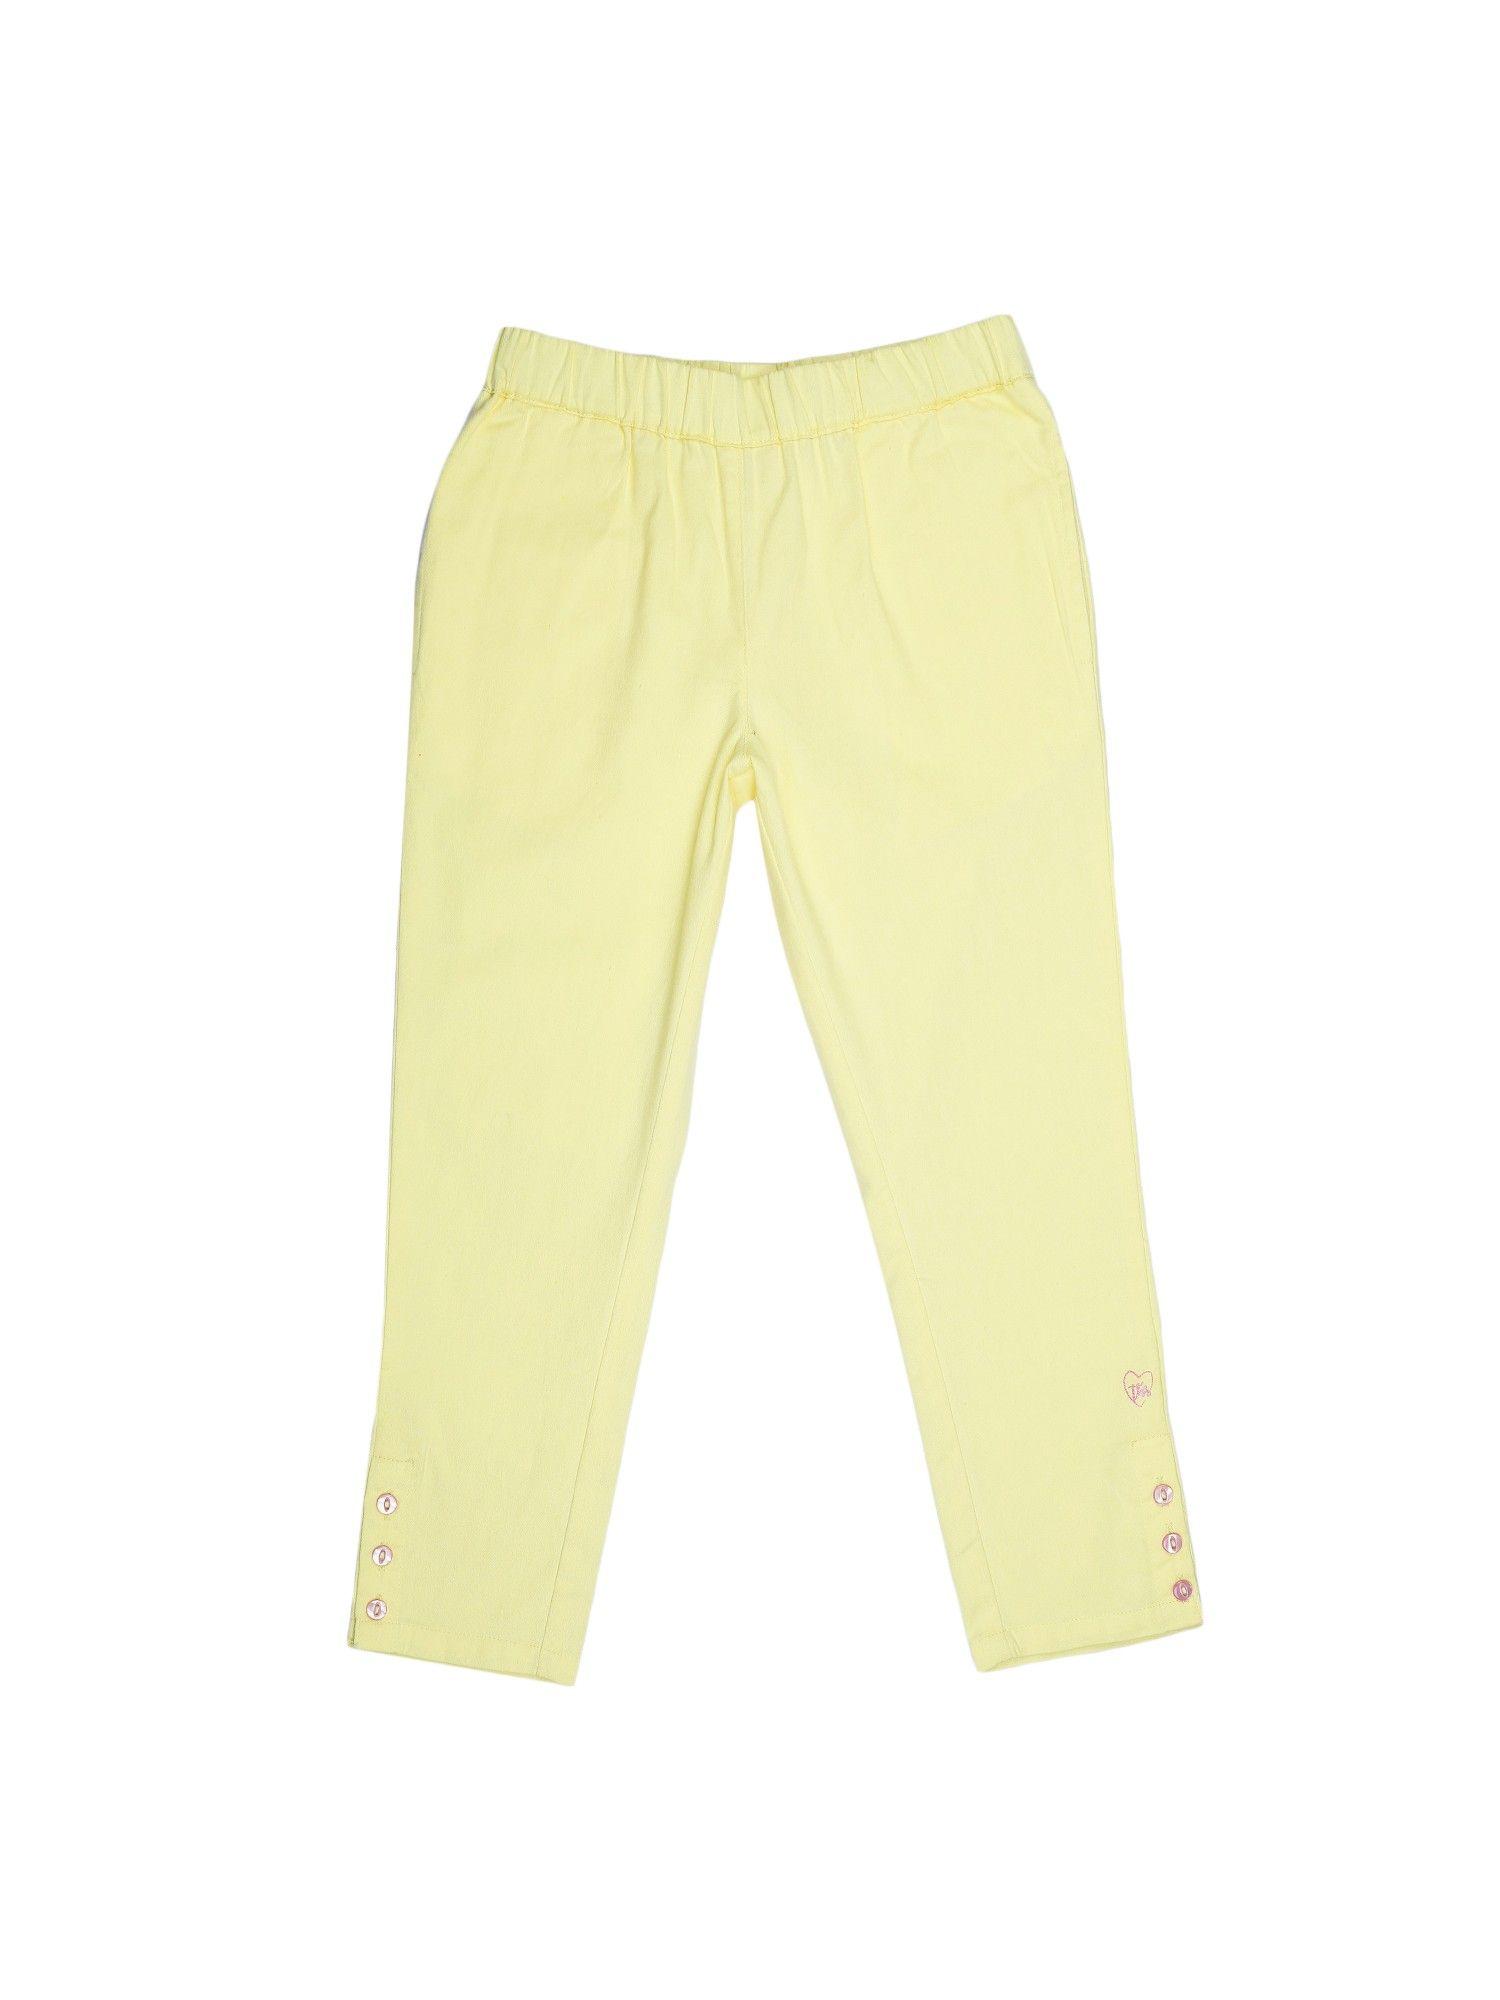 kids girls yellow pants